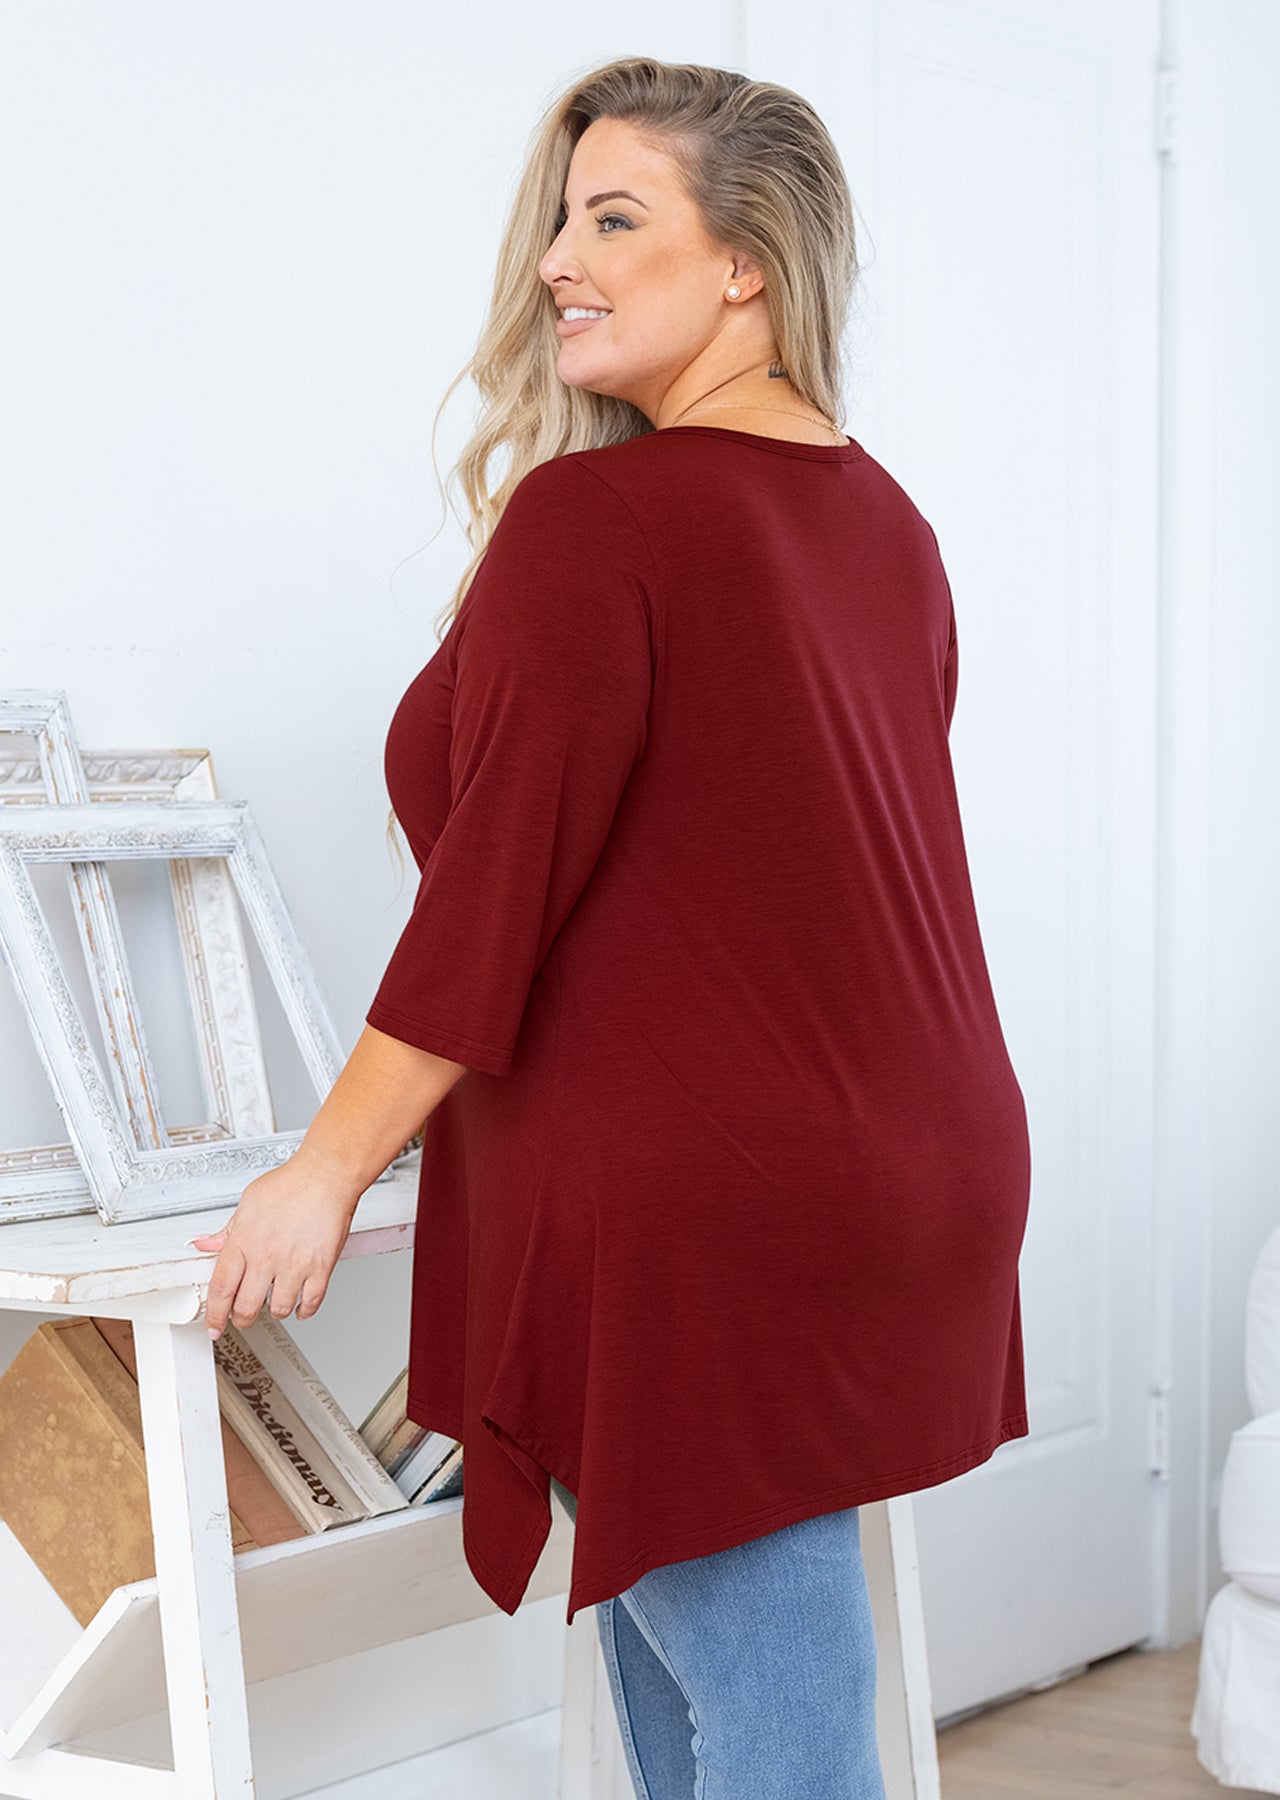  AusLook Plus Size Women Tops 3/4 Sleeve Shirts